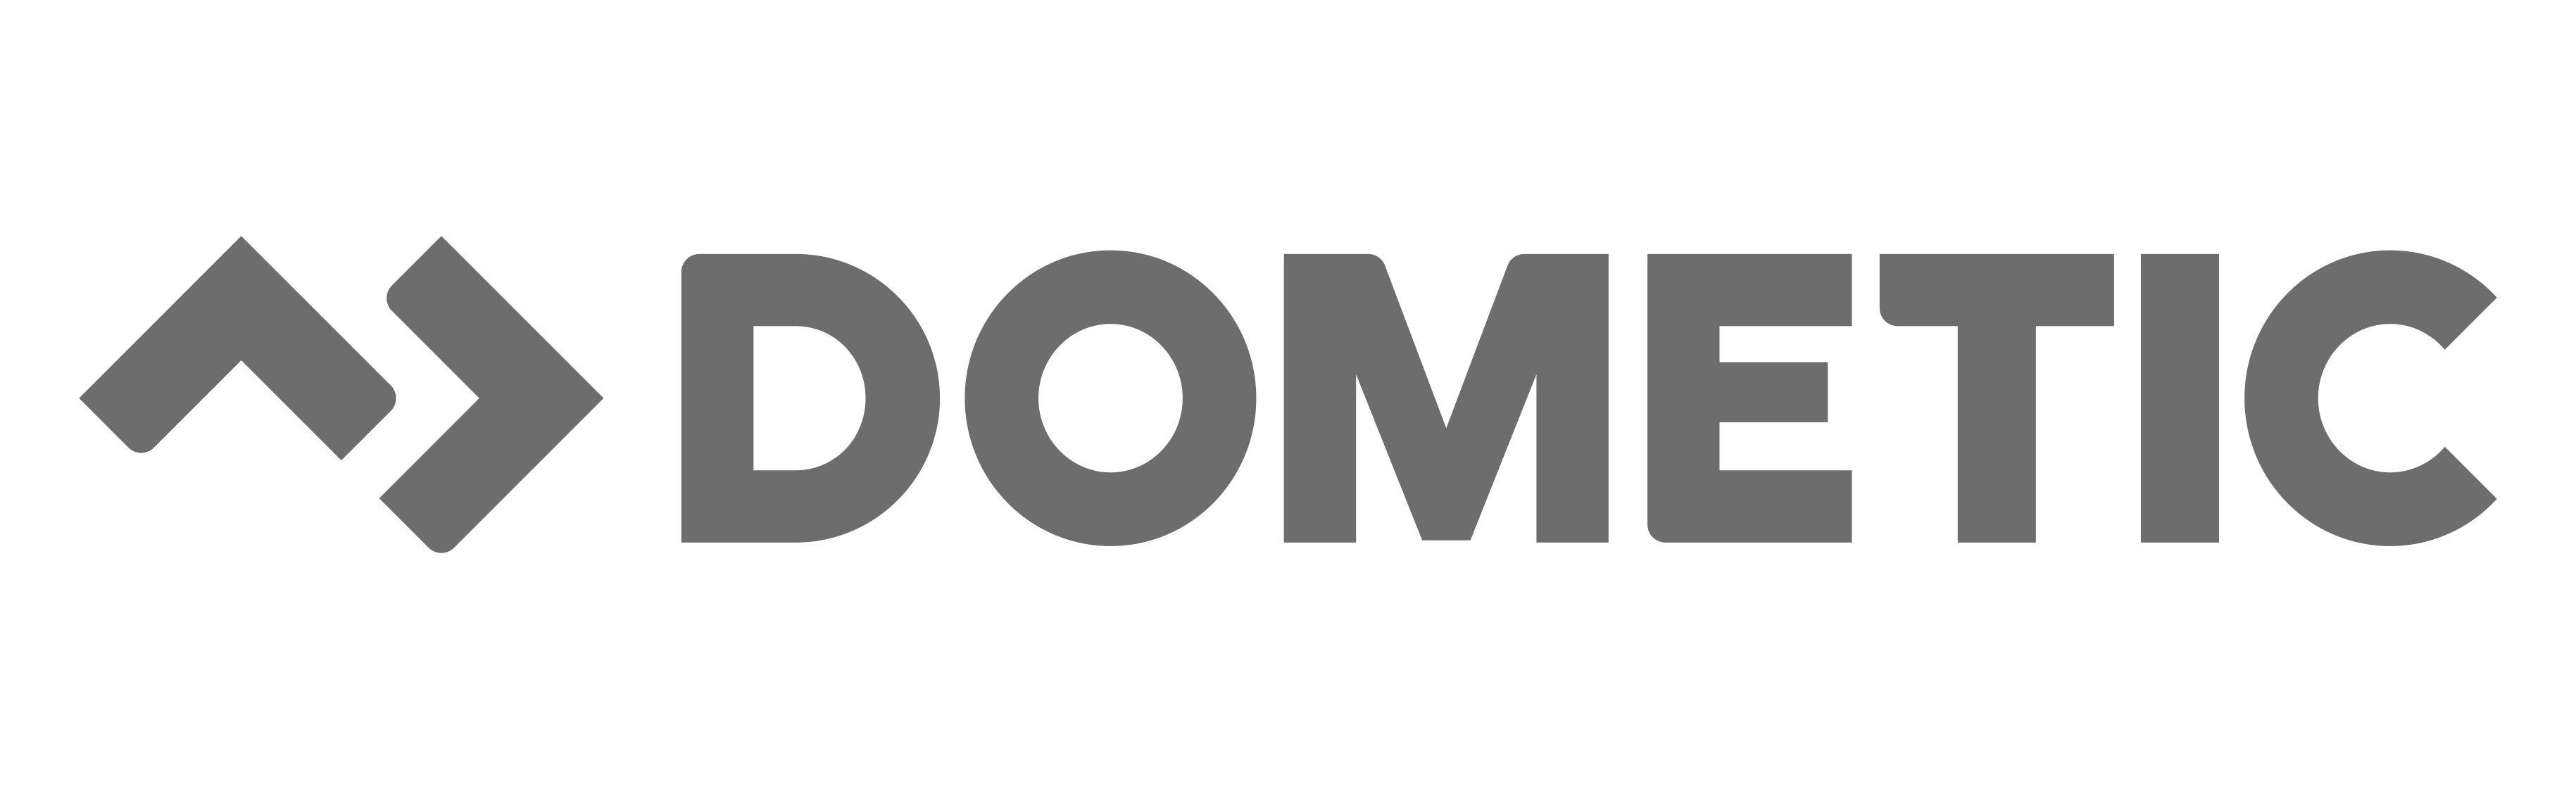 Dometic Logo - Logo Dometic NEW_dark Grey Jazz Festival